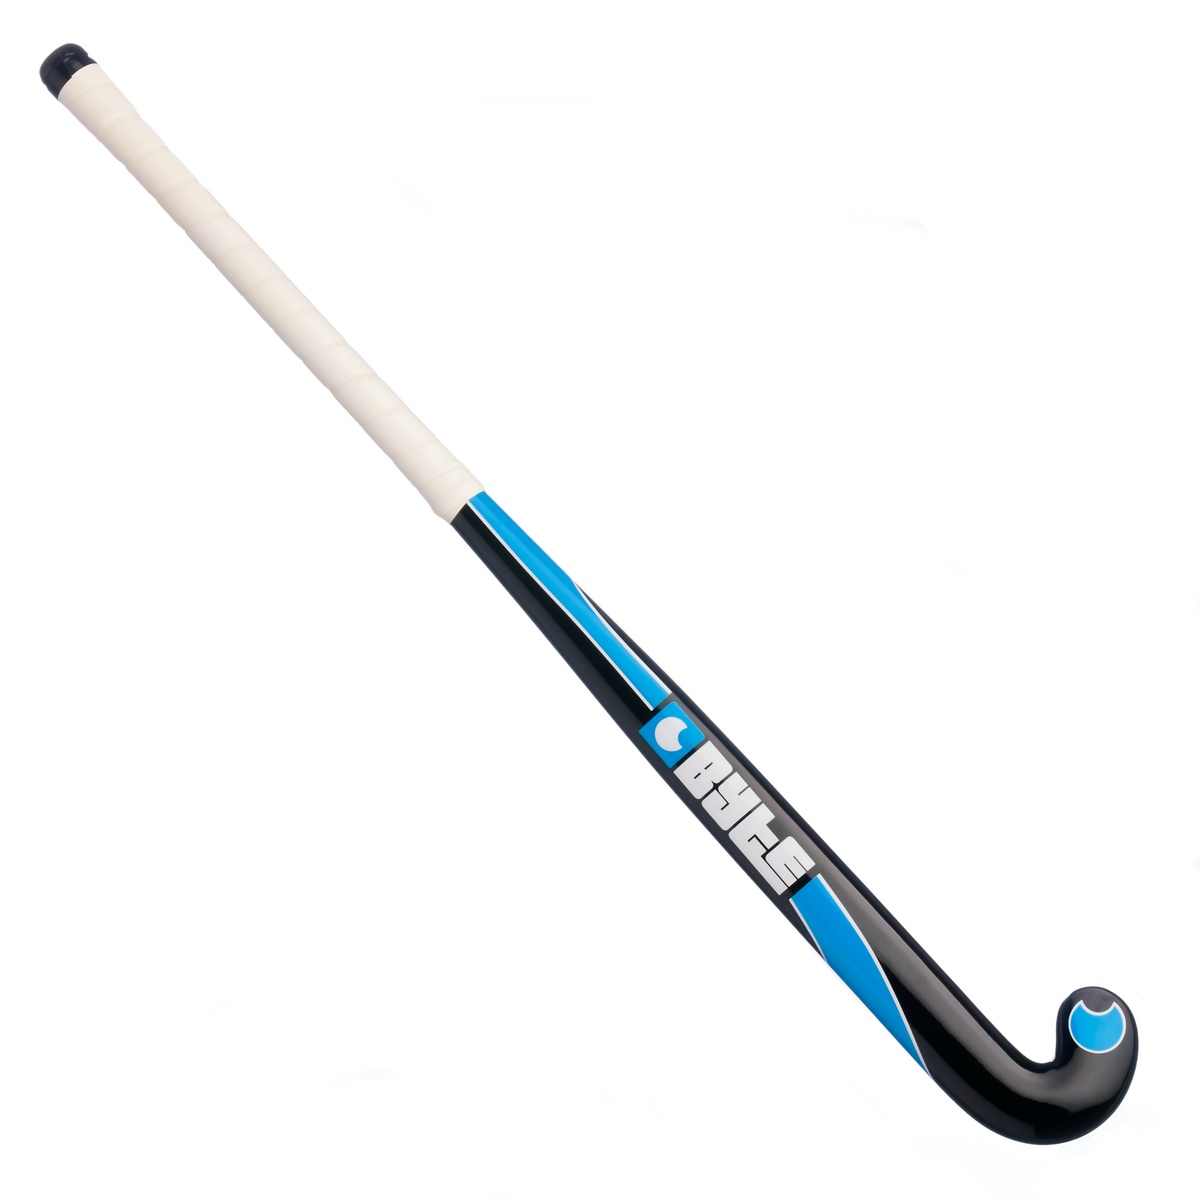 Field hockey stick clipart